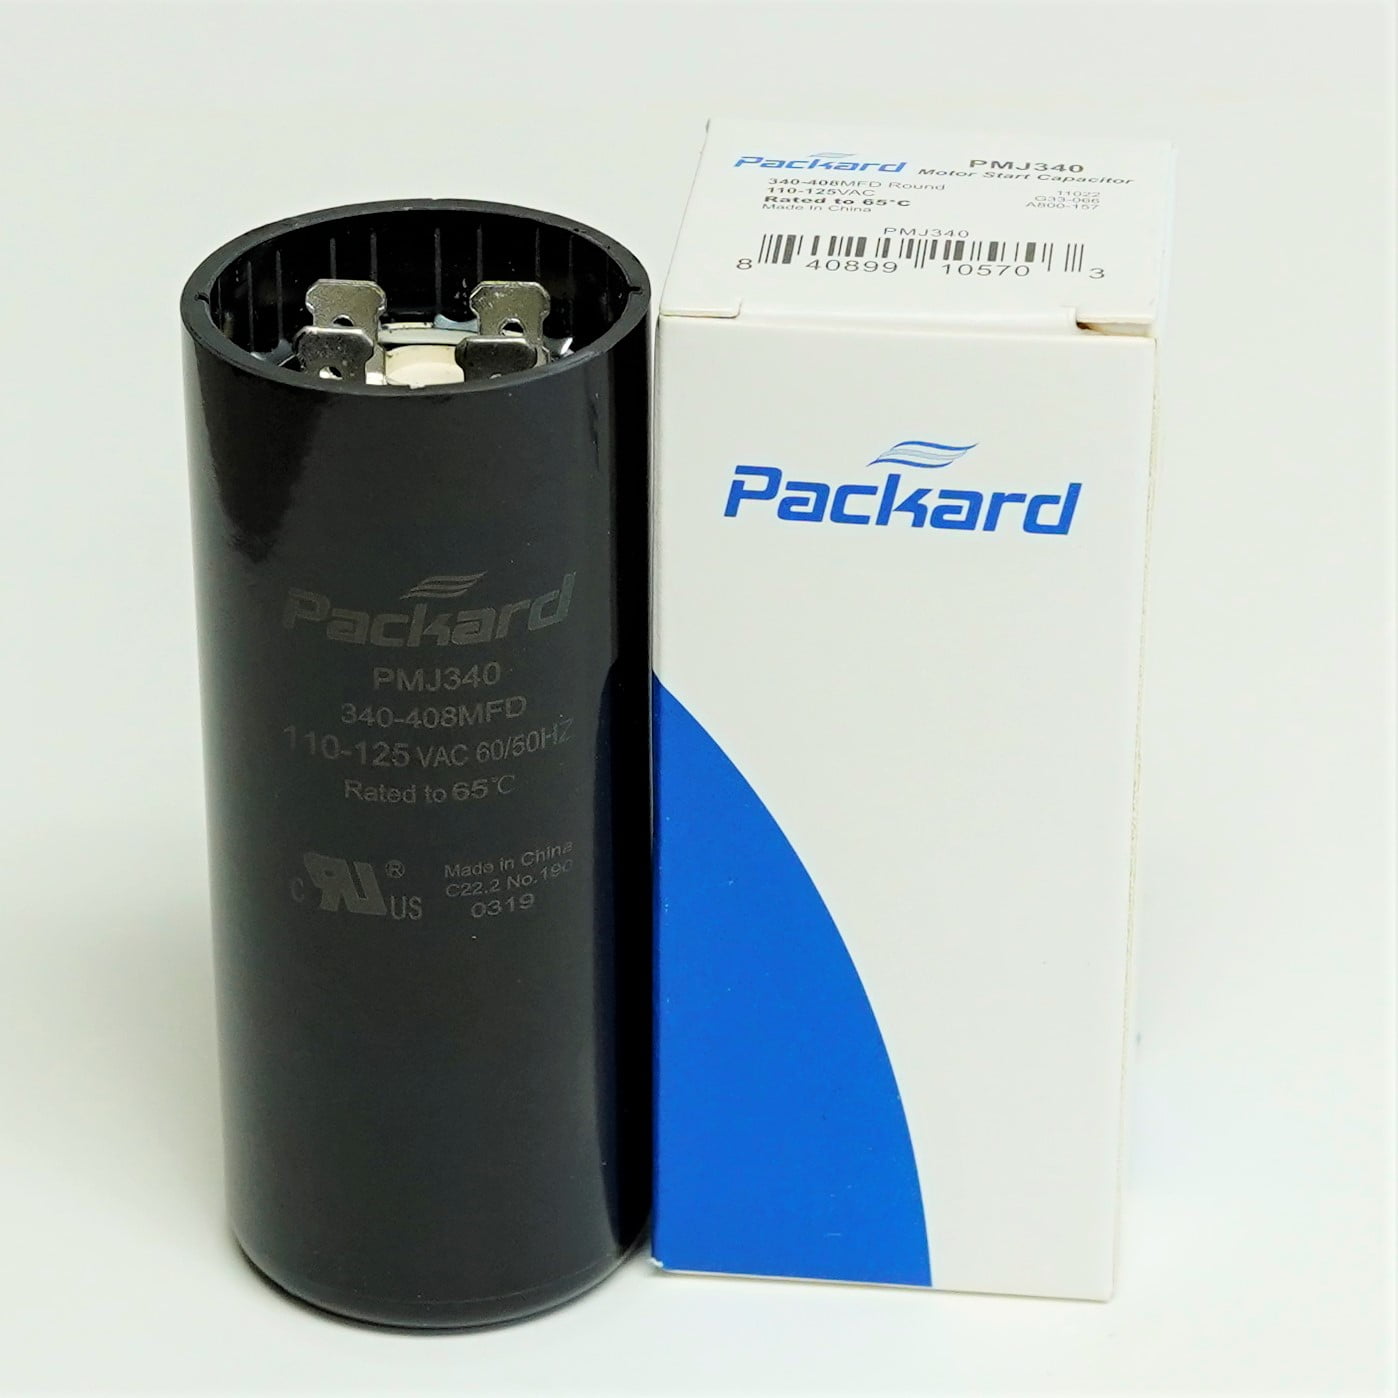 Packard PMJ340 Motor Start Capacitor 340-408 Mfd/110-125 VAC for sale online 